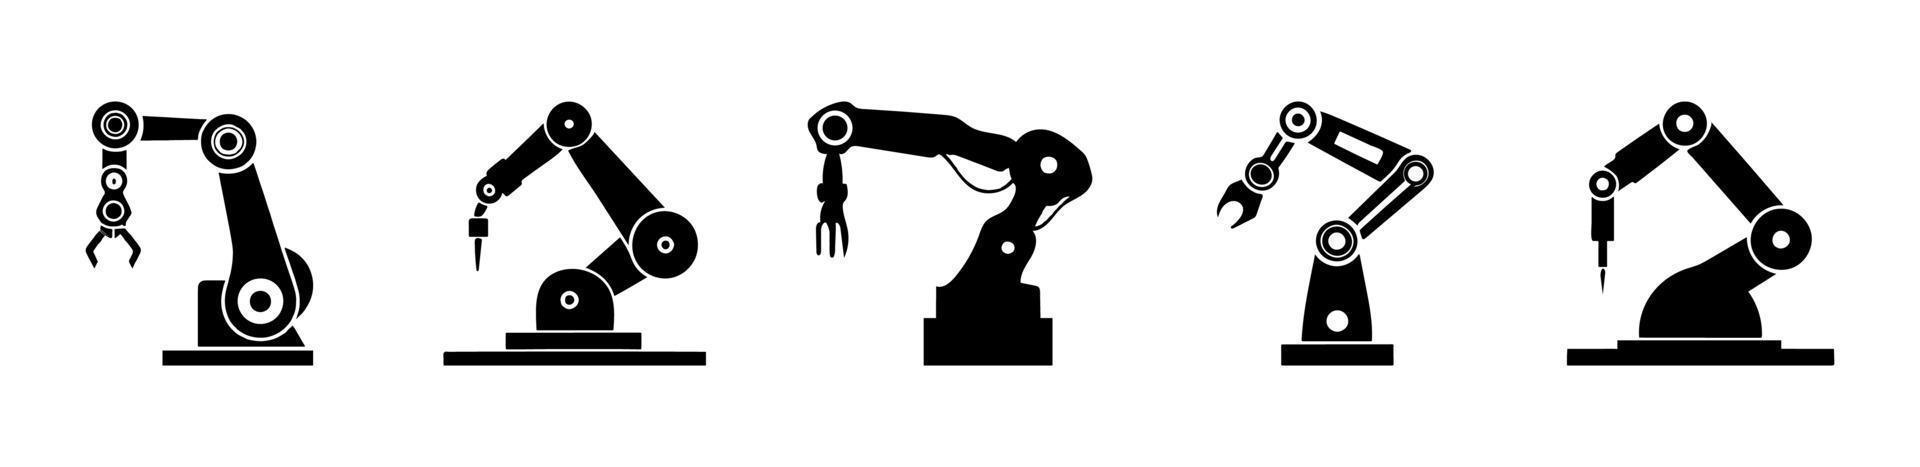 Robotic hand manipulator silhouette symbol icon. vector